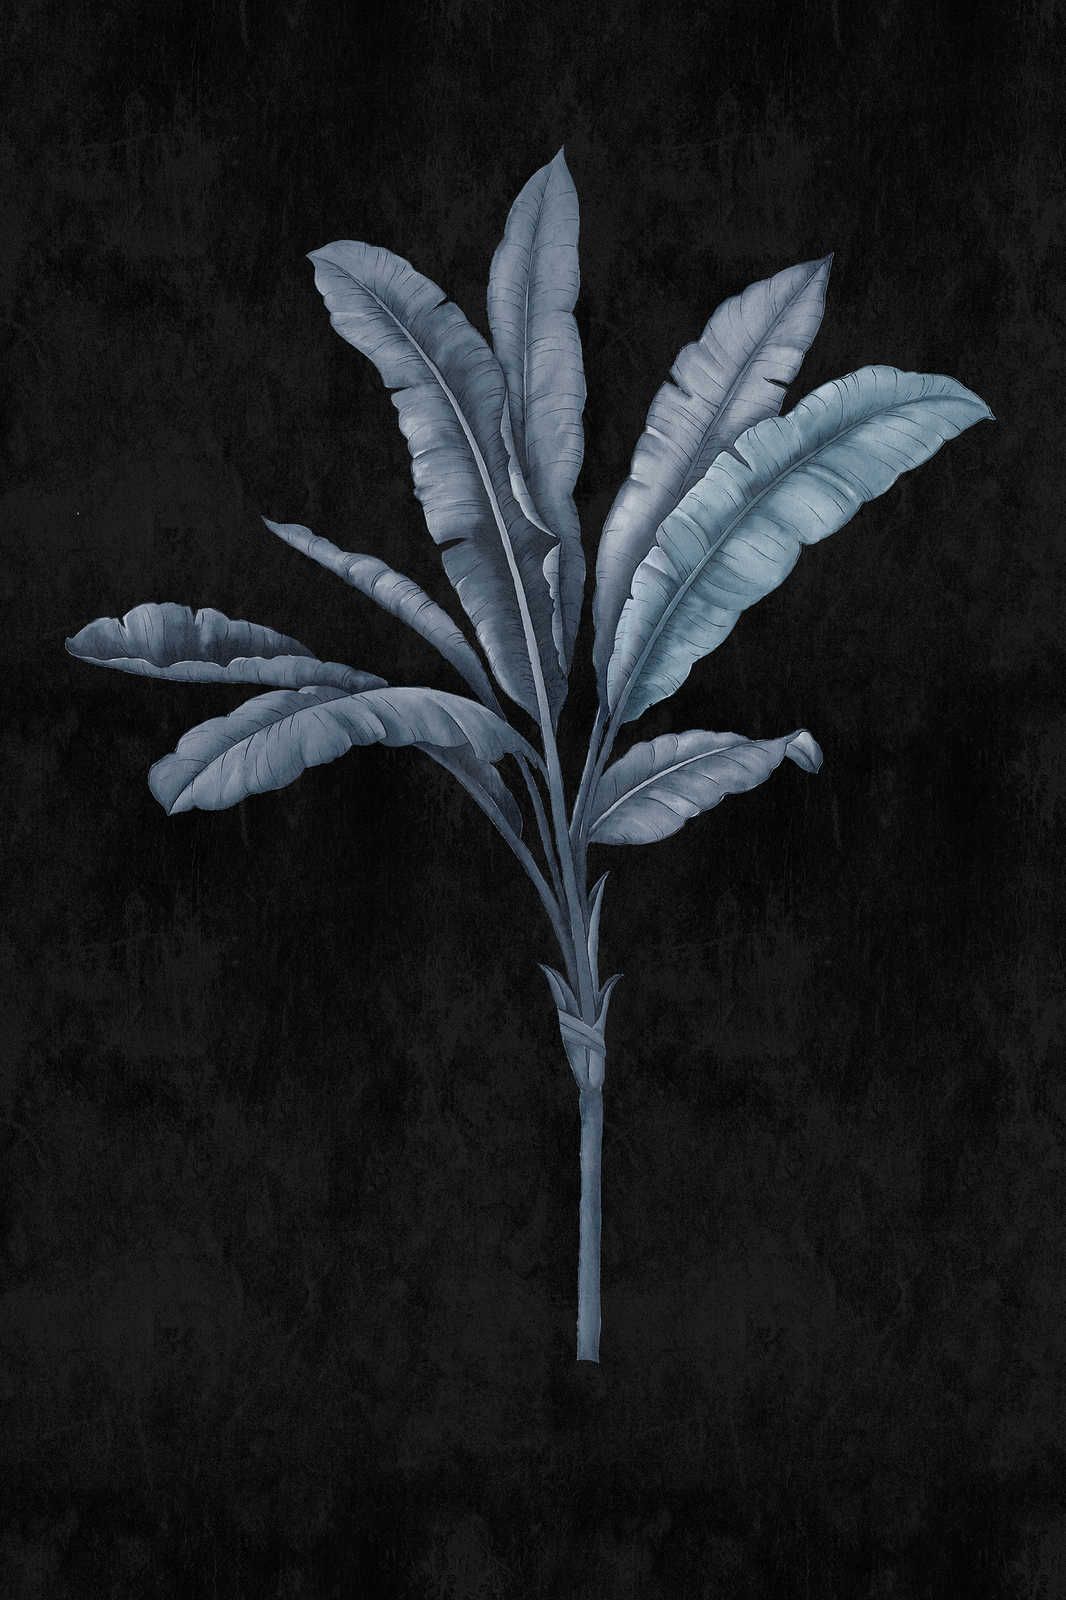             Fiji 2 - Cuadro en lienzo Negro con motivo de palmeras Gris Azul - 0,60 m x 0,90 m
        